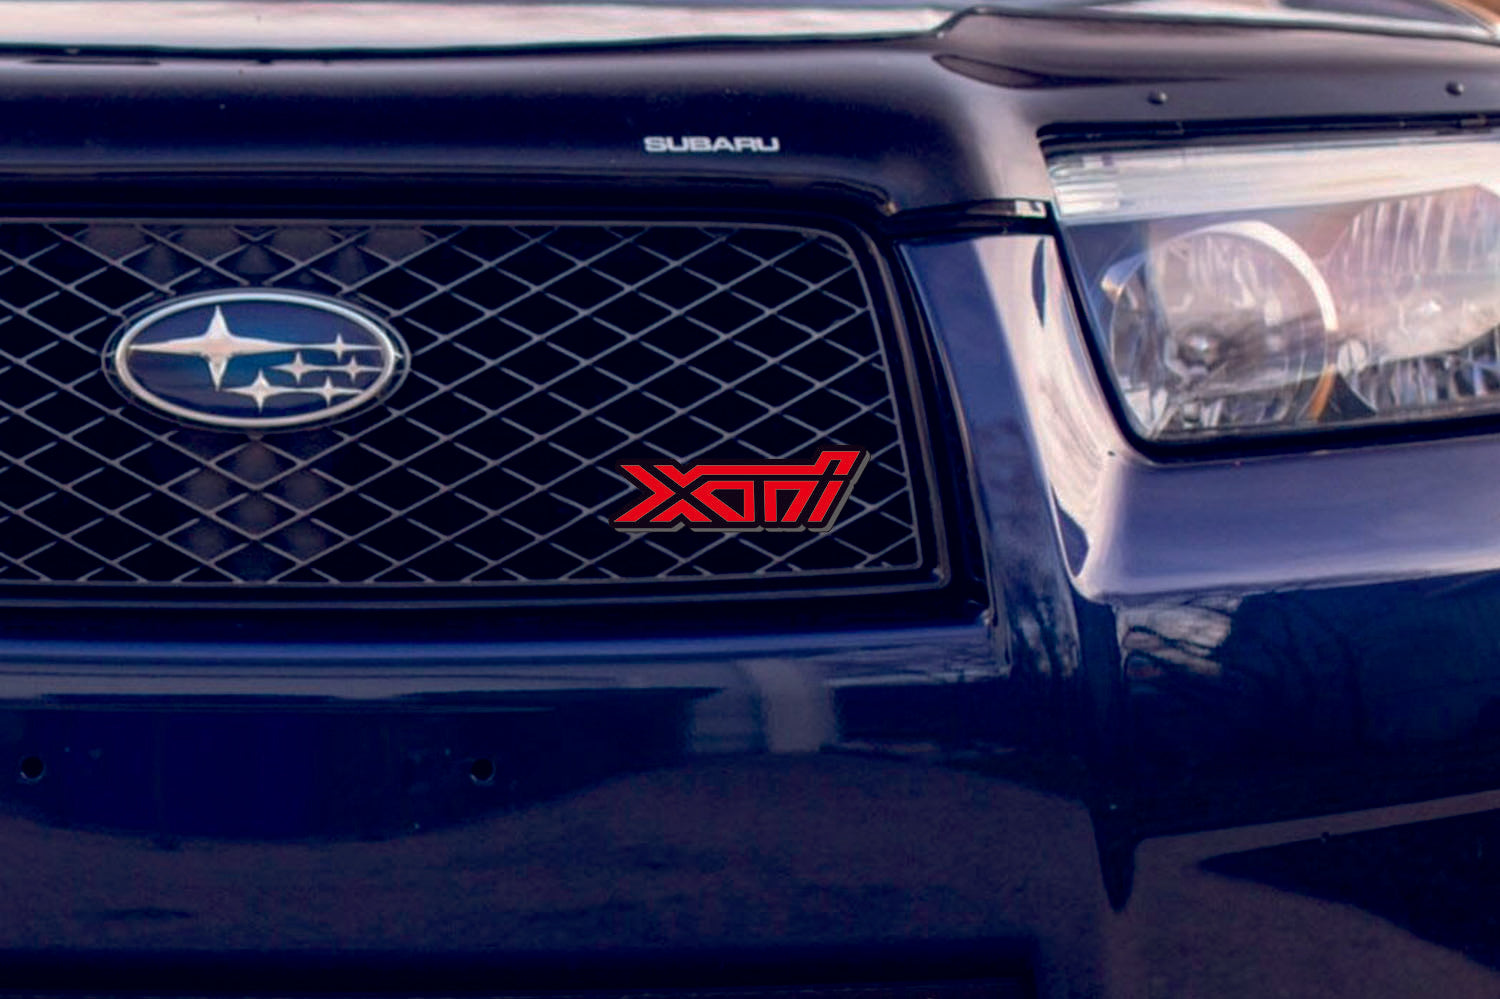 Subaru Radiator grille emblem with XTI logo